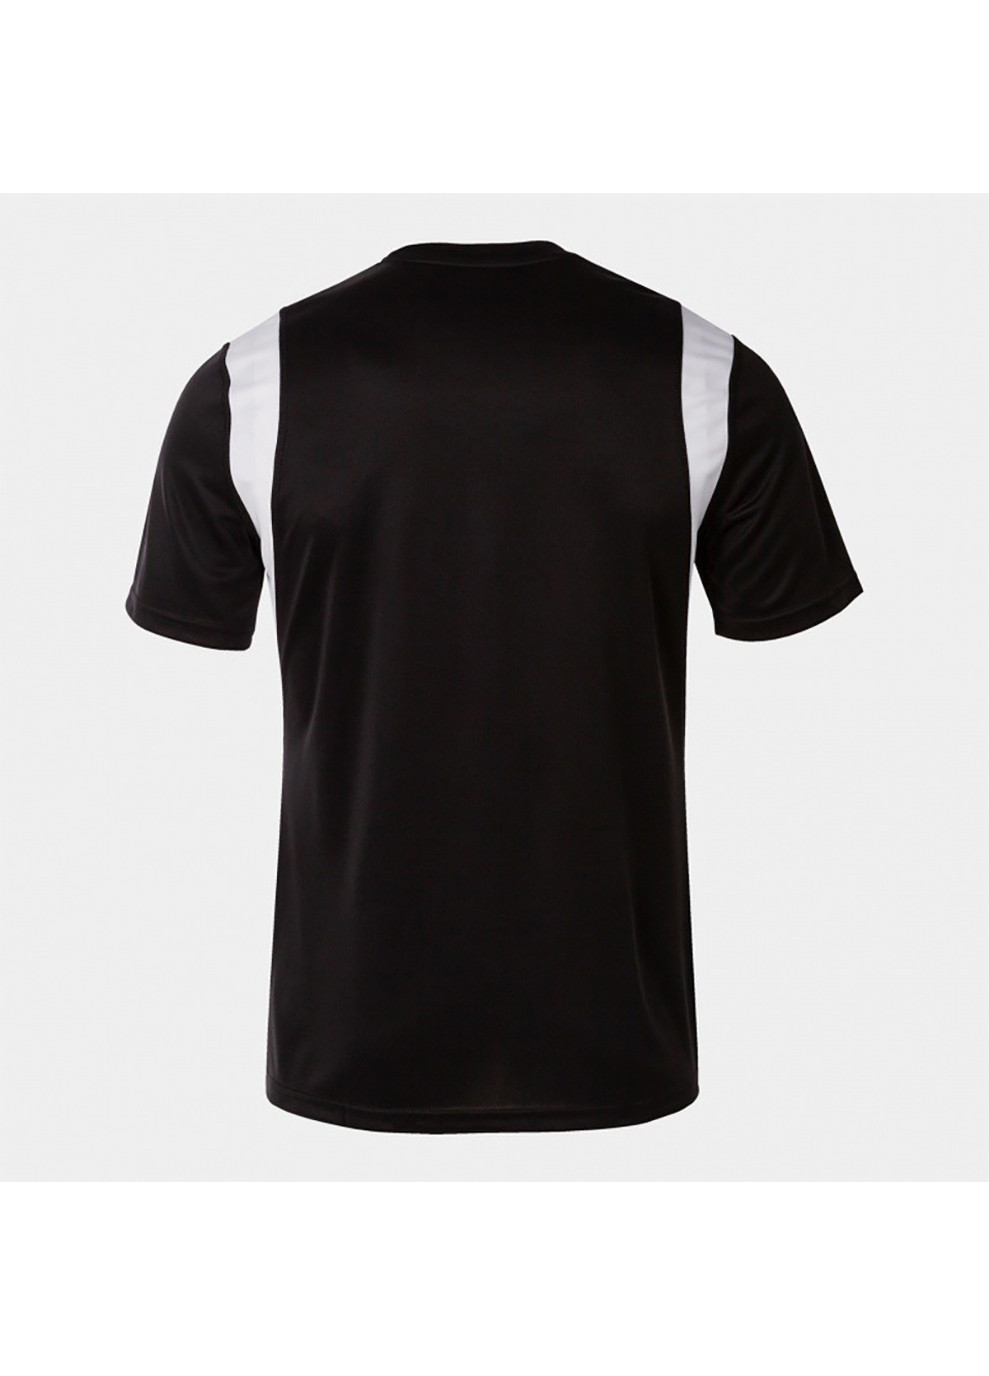 Чорна футболка t-shirt dinamo black s/s чорний 100446.100 Joma